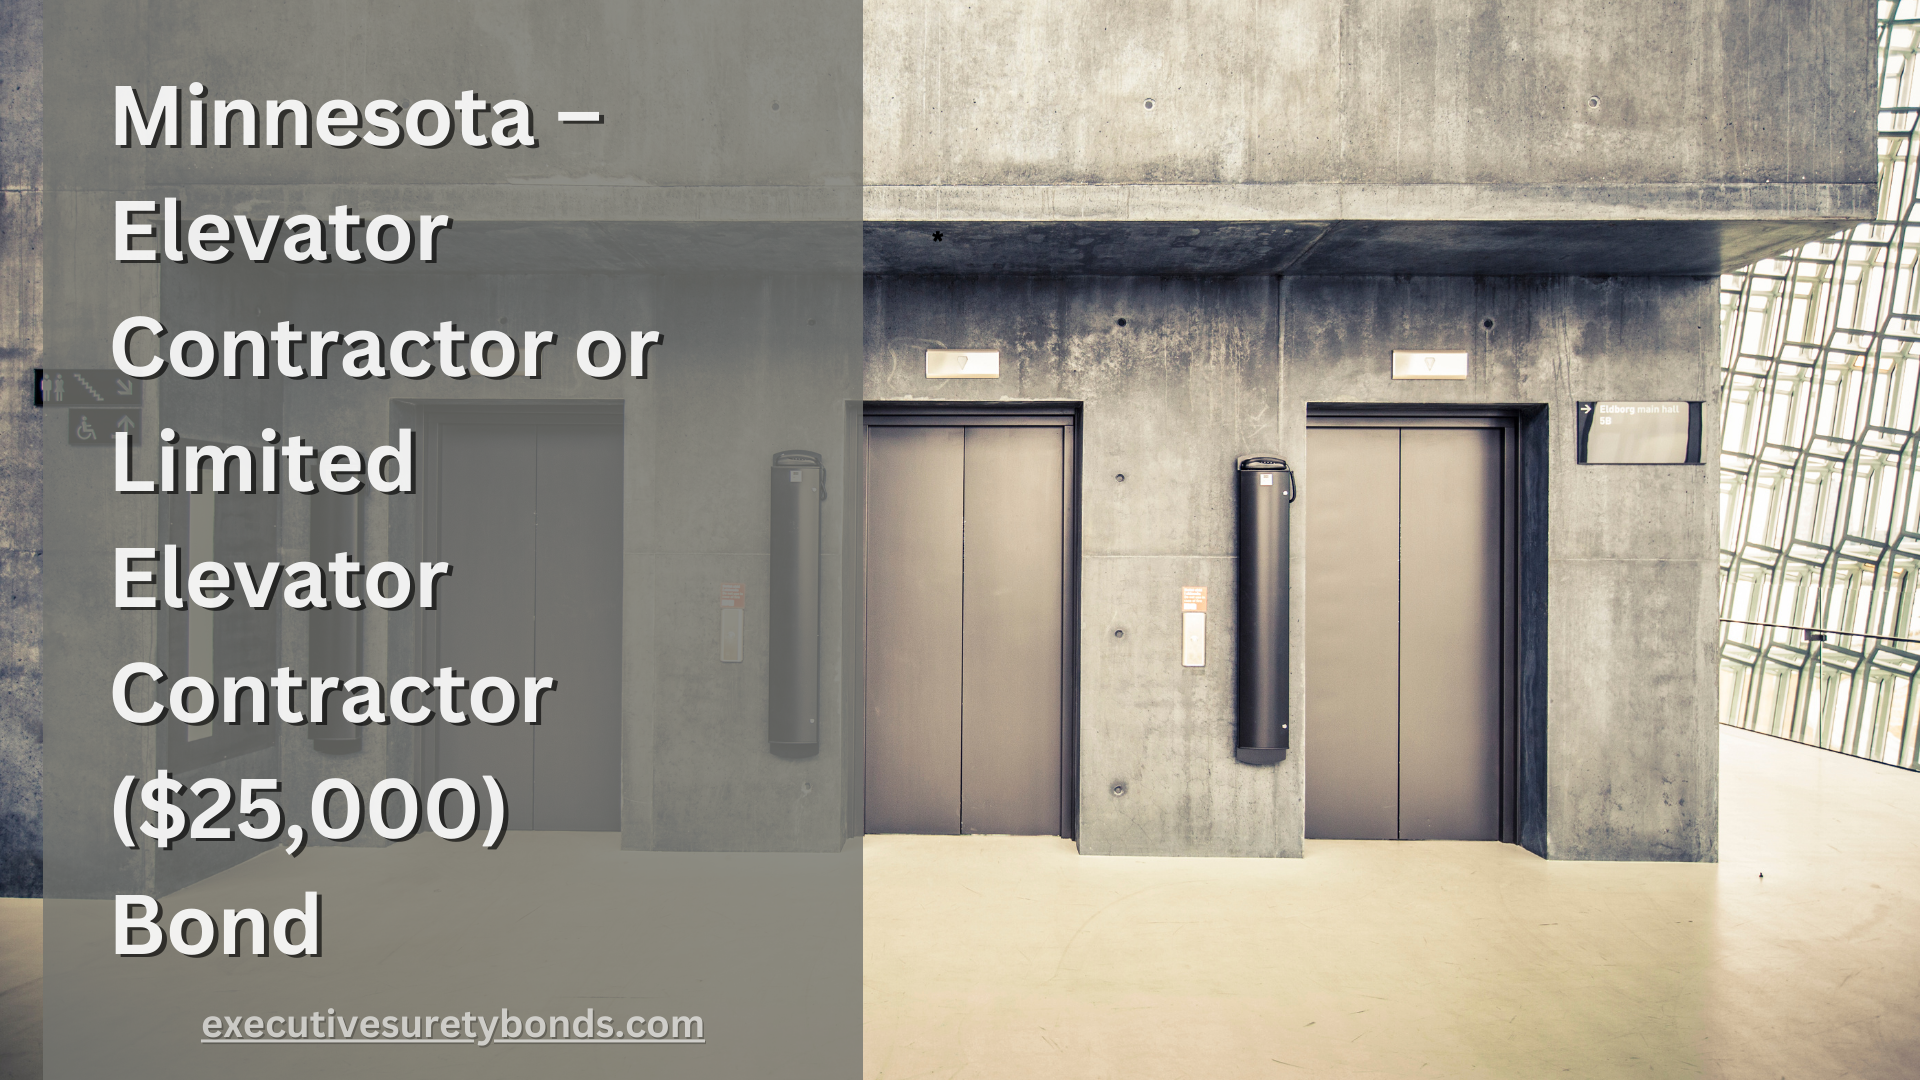 Minnesota – Elevator Contractor or Limited Elevator Contractor ($25,000) Bond